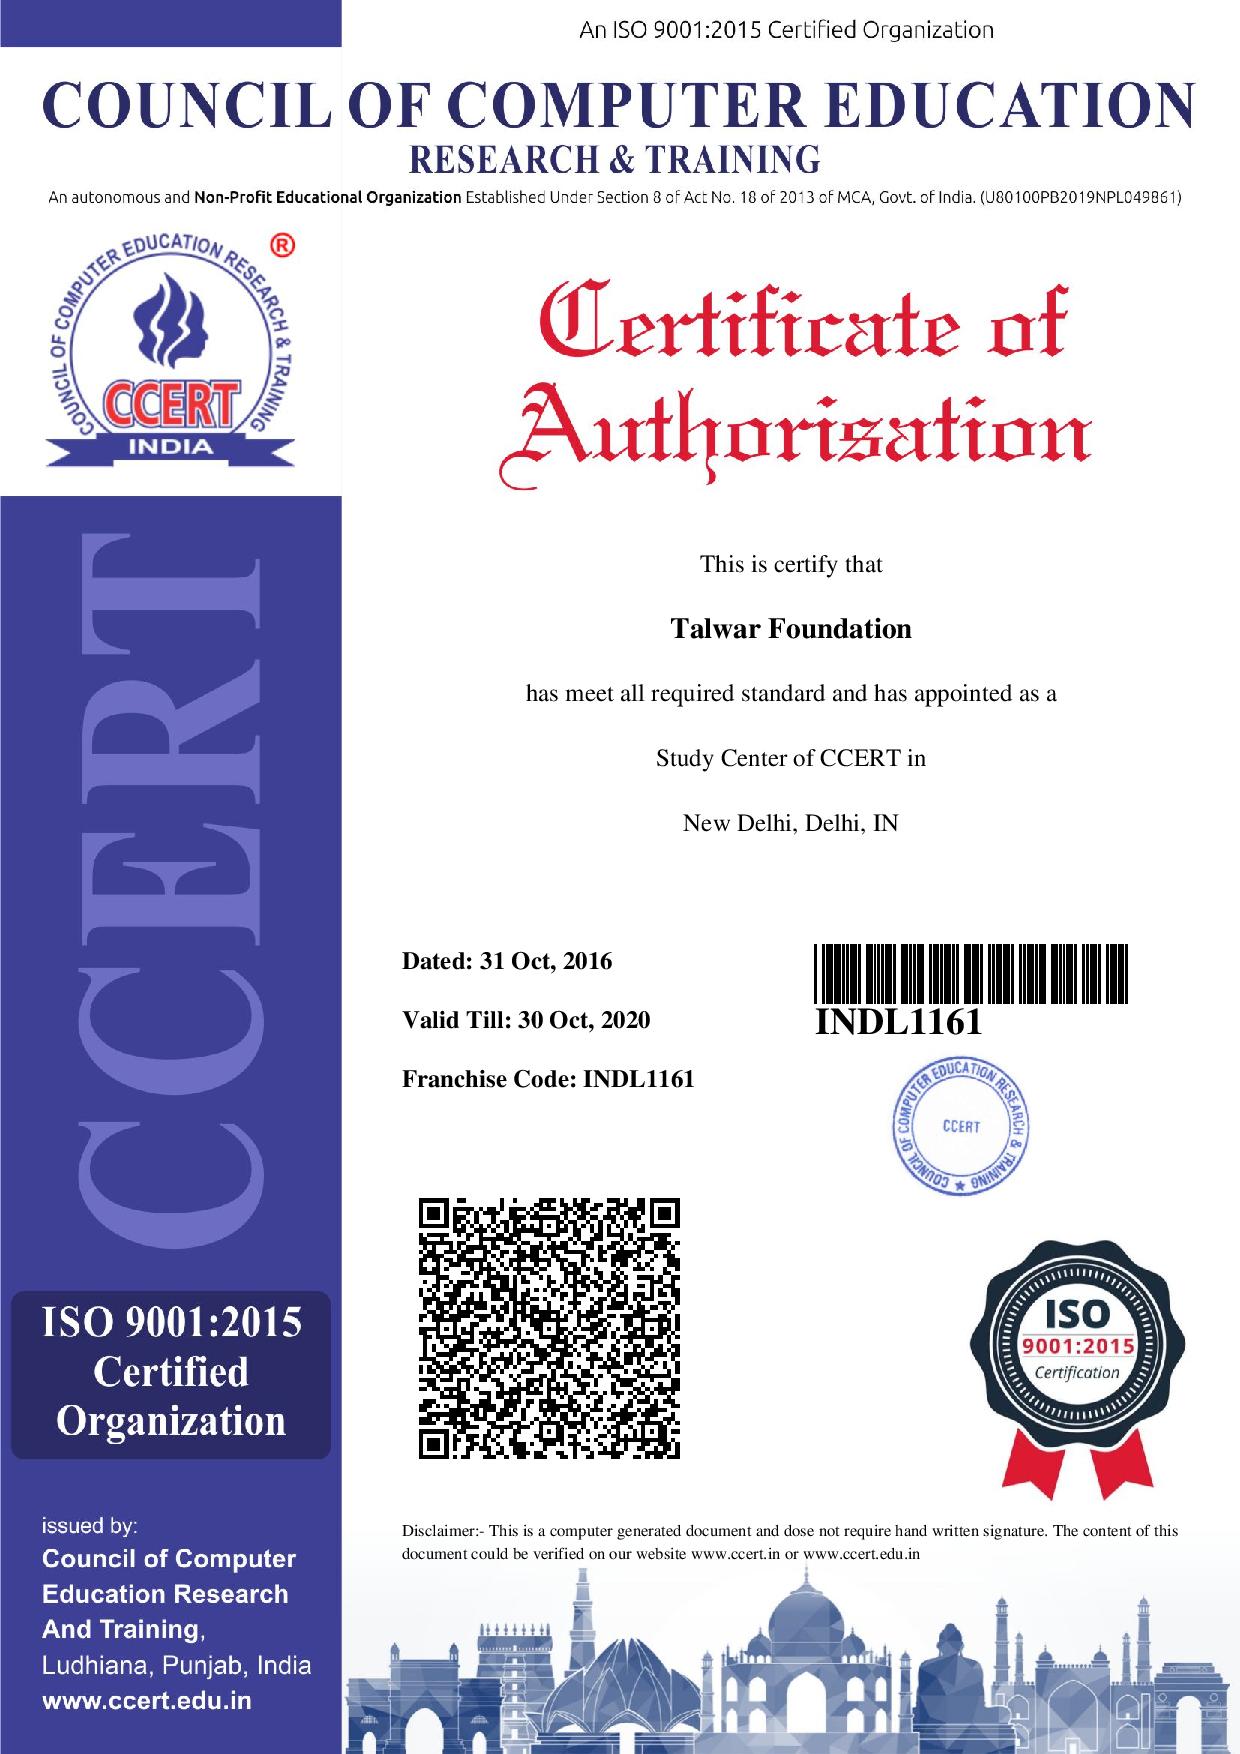 Sample Certificate of Franchise